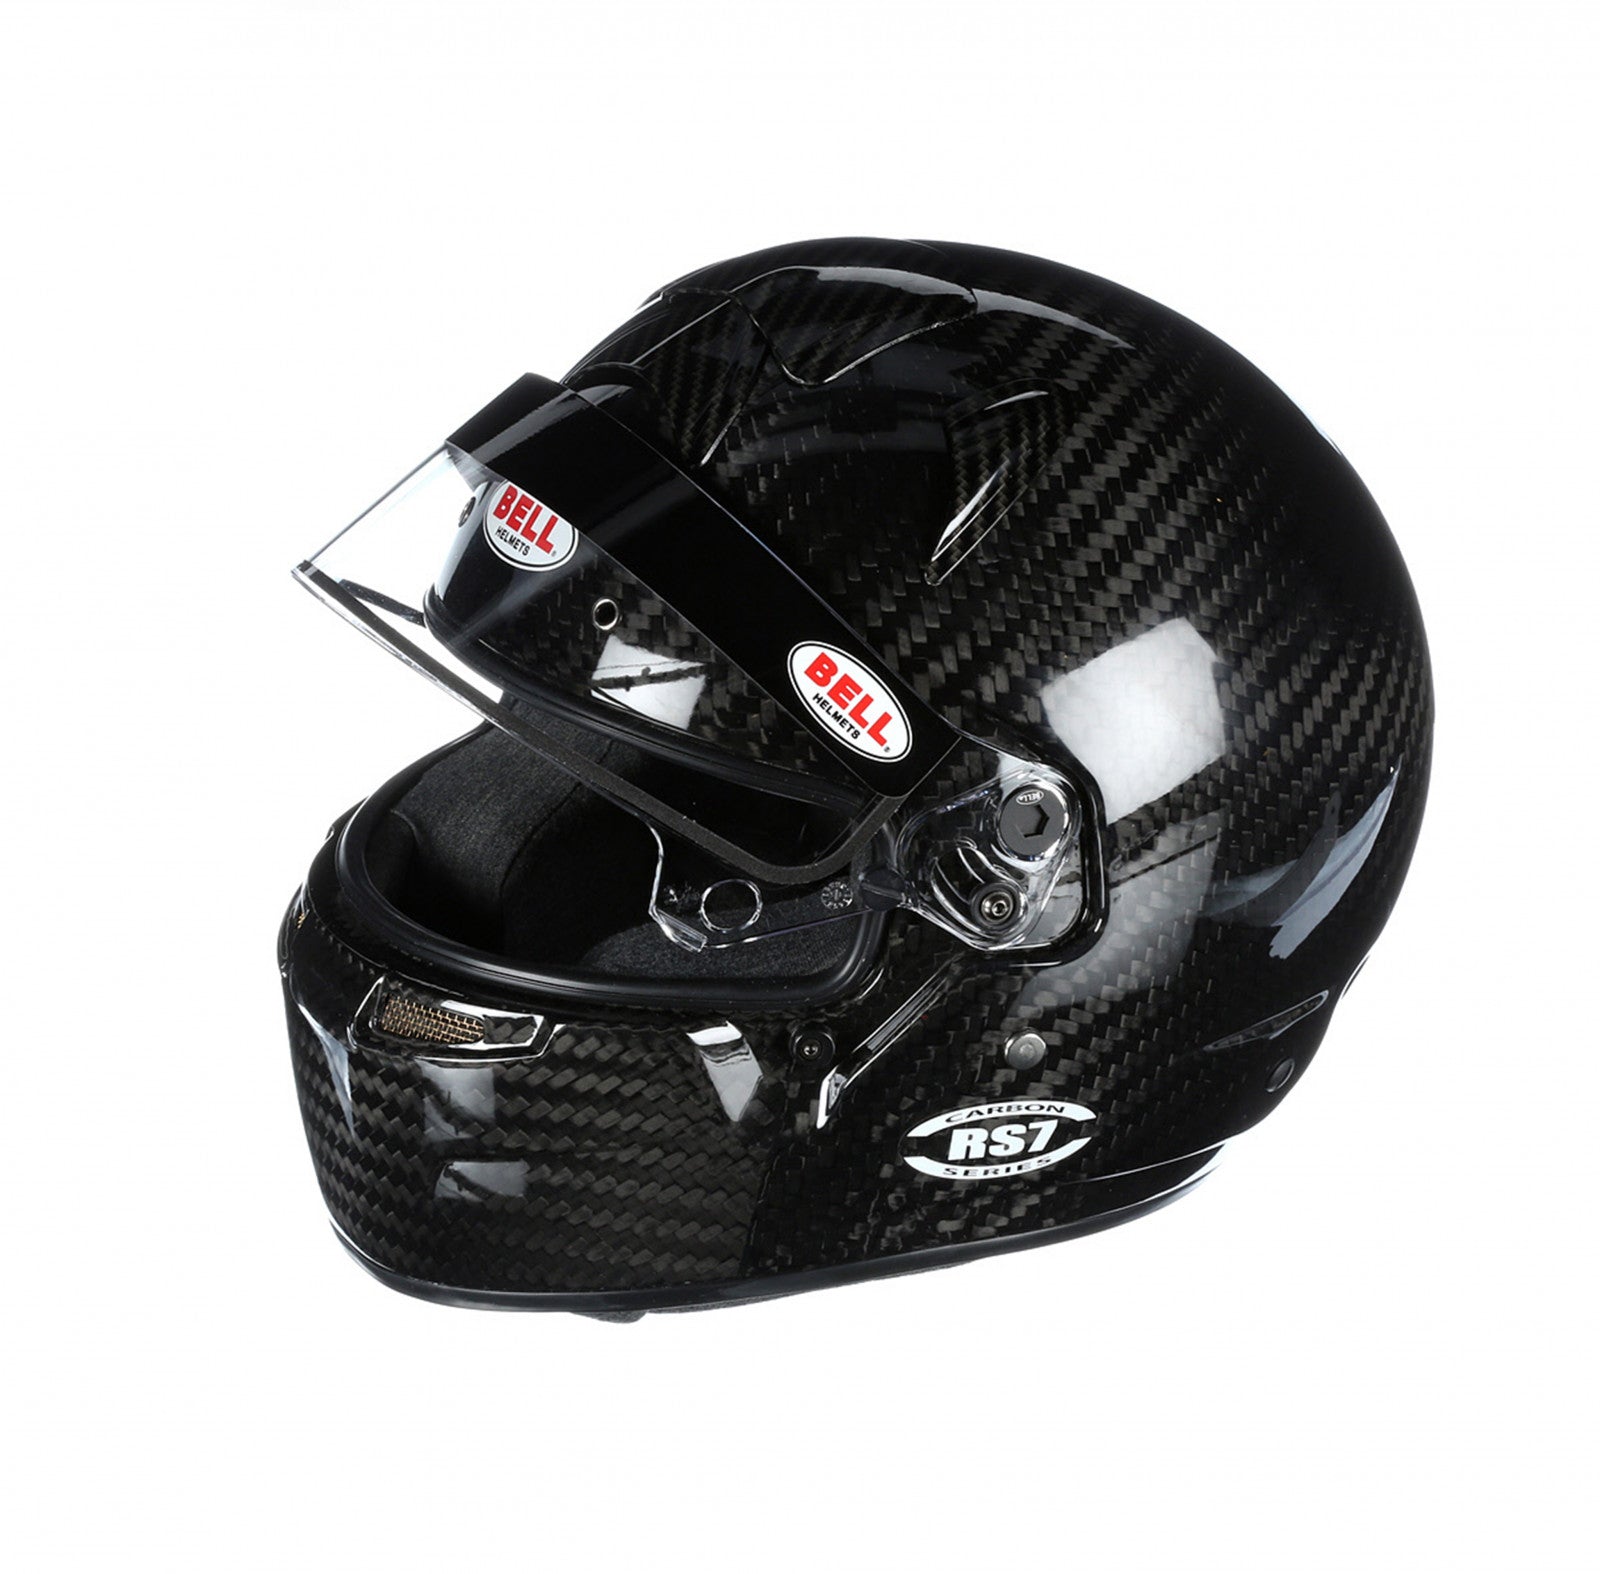 Bell RS7 Carbon Helmet Size 55 cm